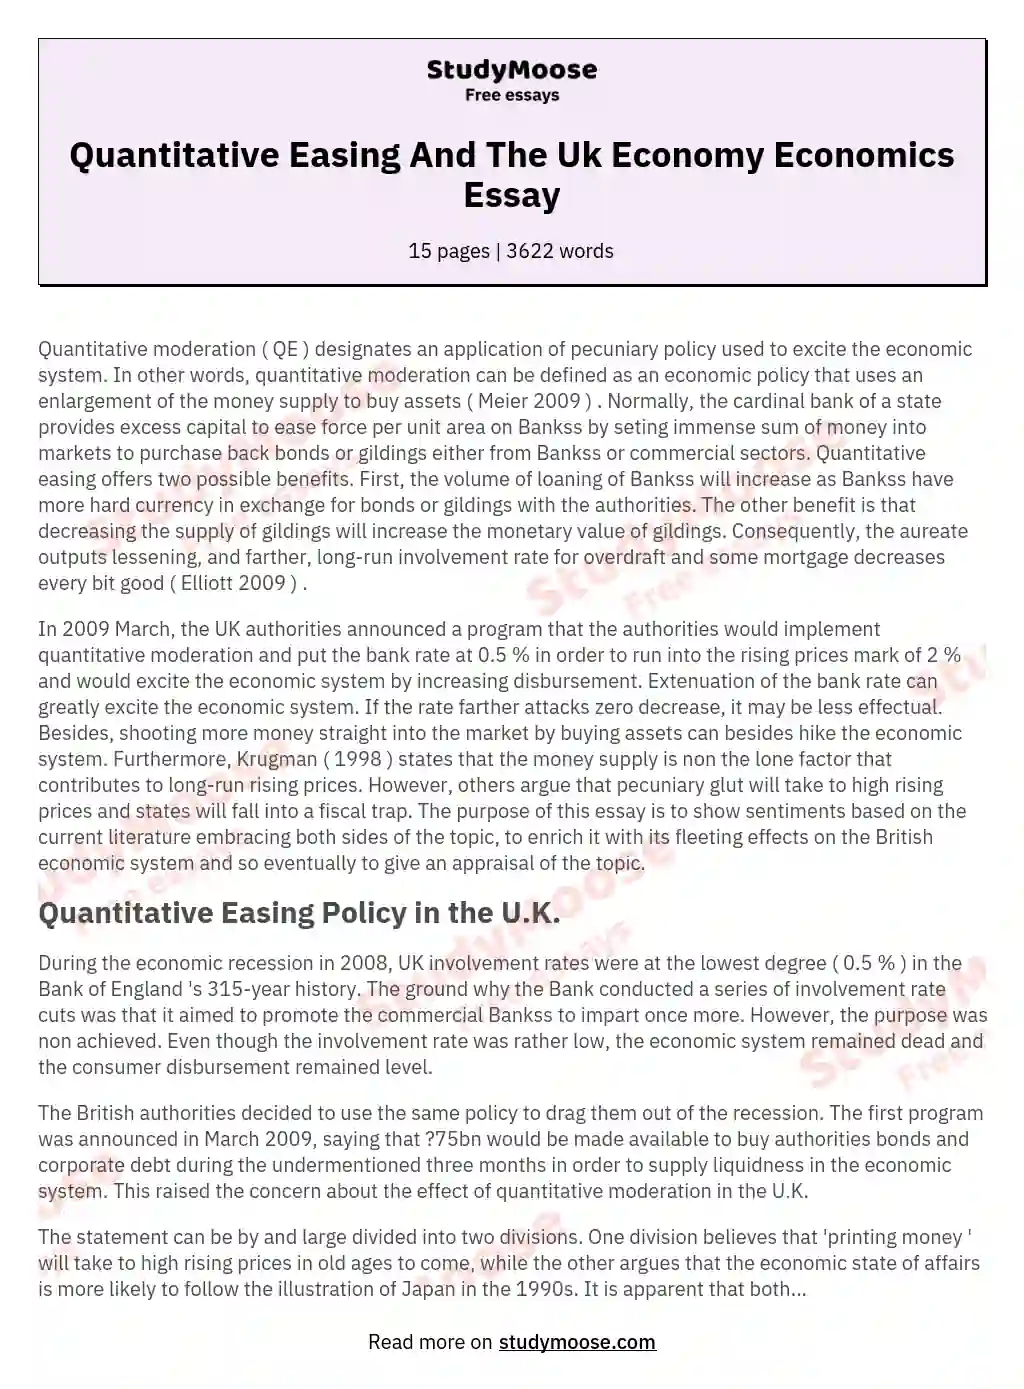 Quantitative Easing And The Uk Economy Economics Essay essay